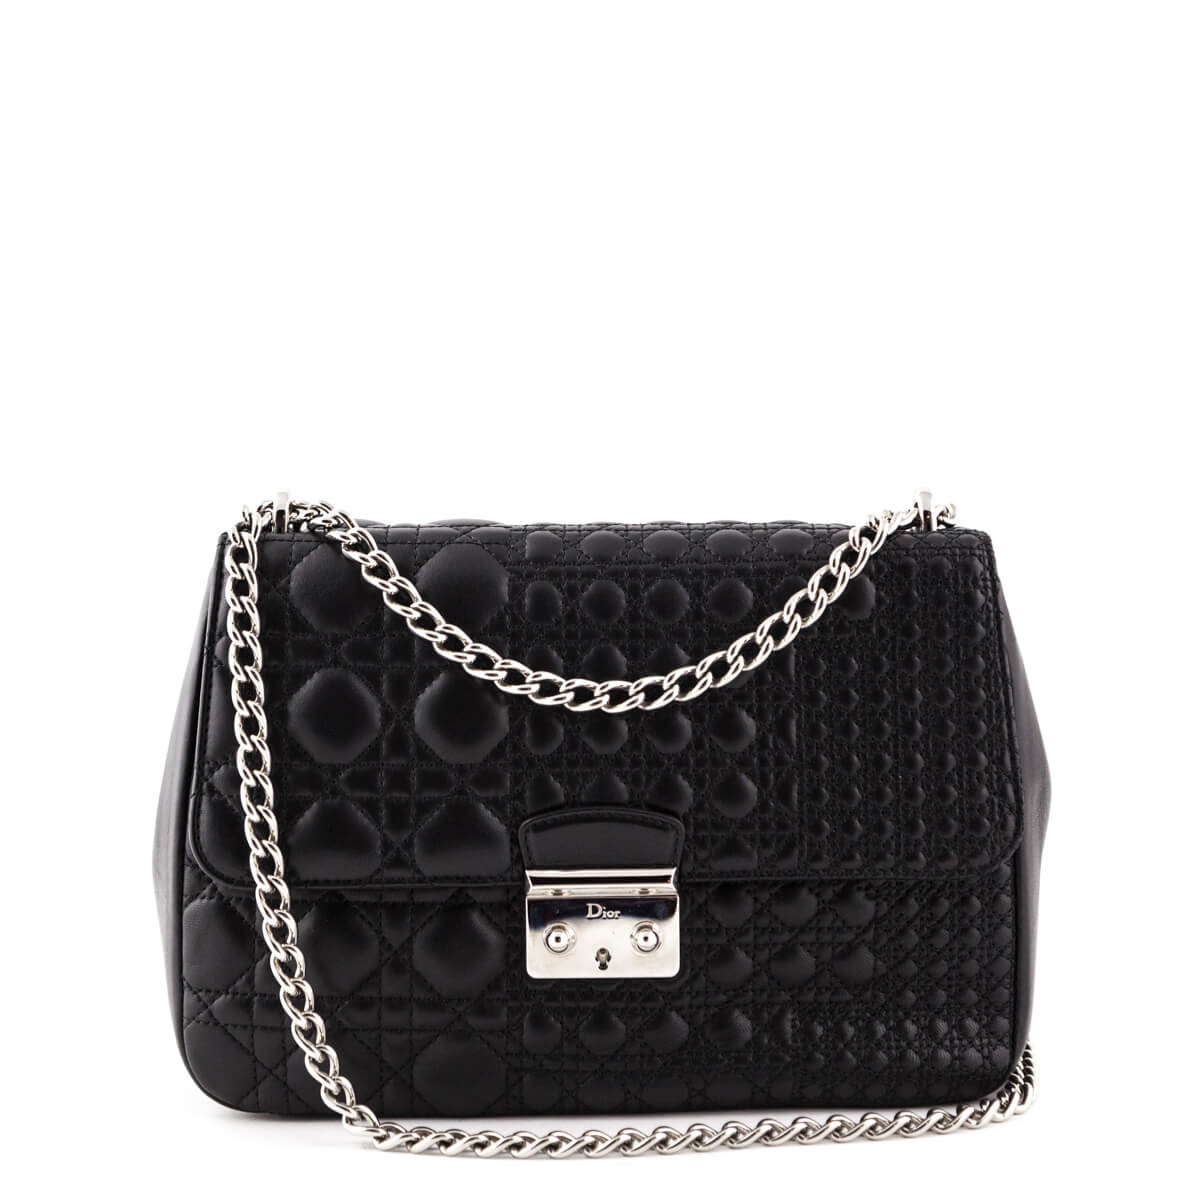 Dior Black Mini Cannage Calfskin Miss Dior Shoulder Bag - Love that Bag etc - Preowned Authentic Designer Handbags & Preloved Fashions